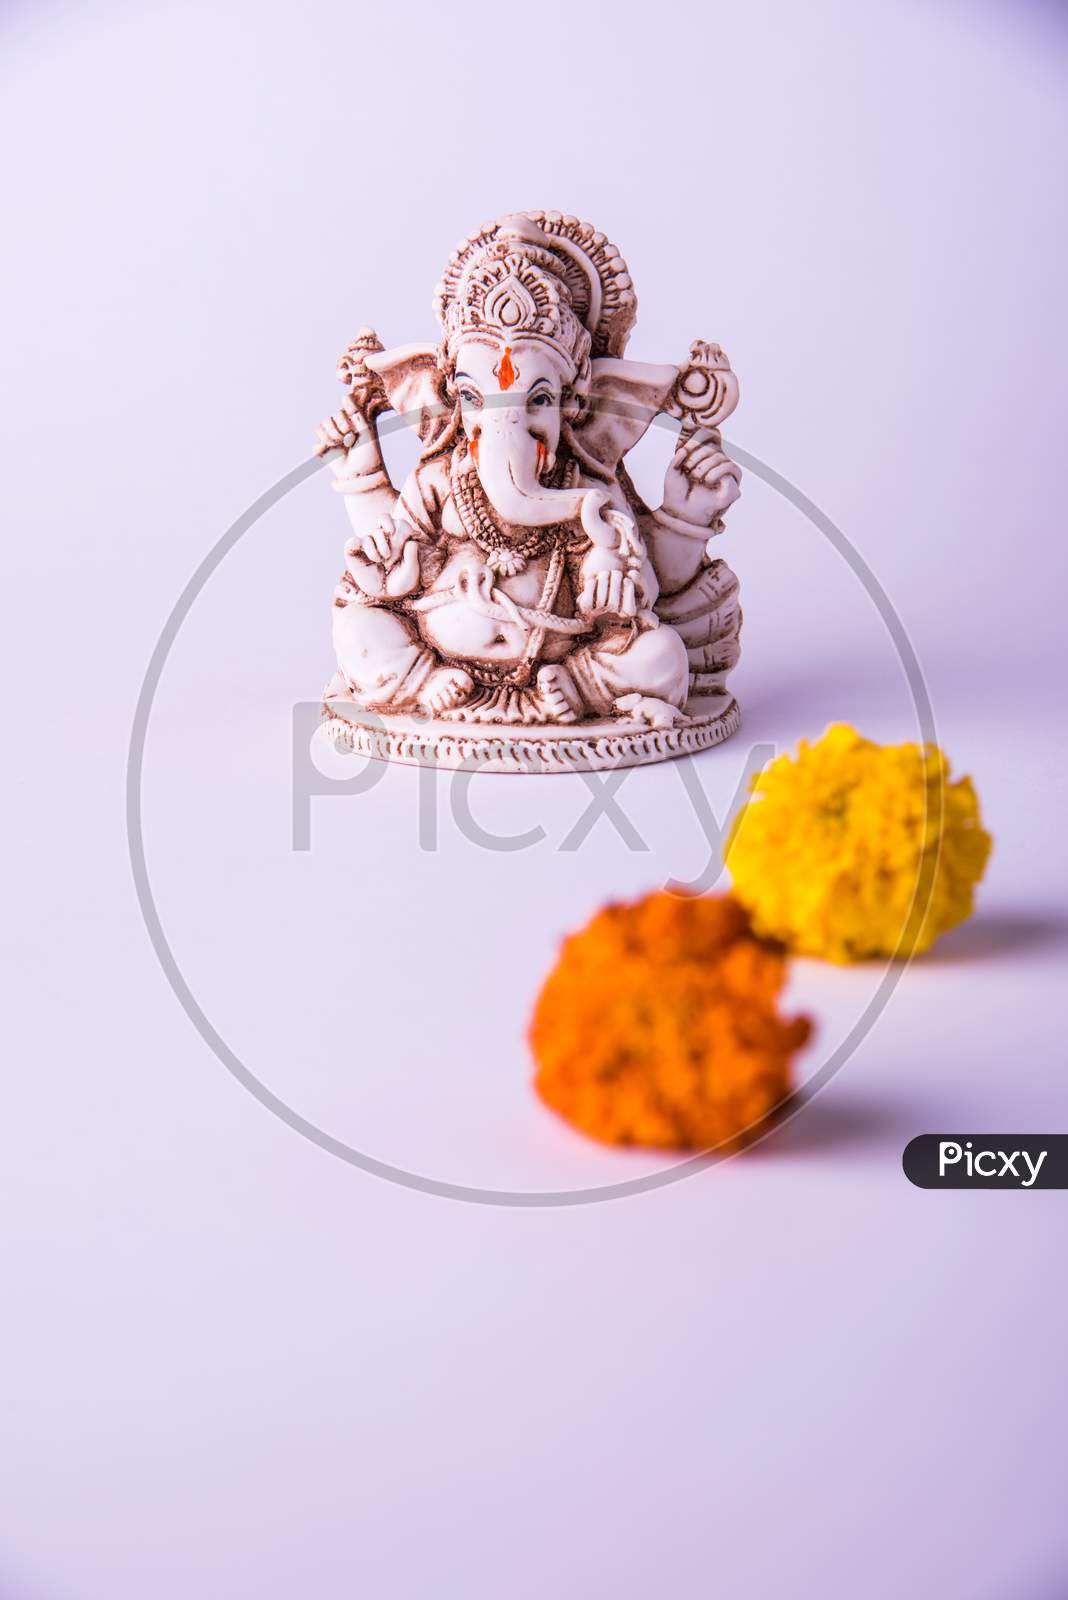 Ganesha idol for Ganesh Chaturthi festival